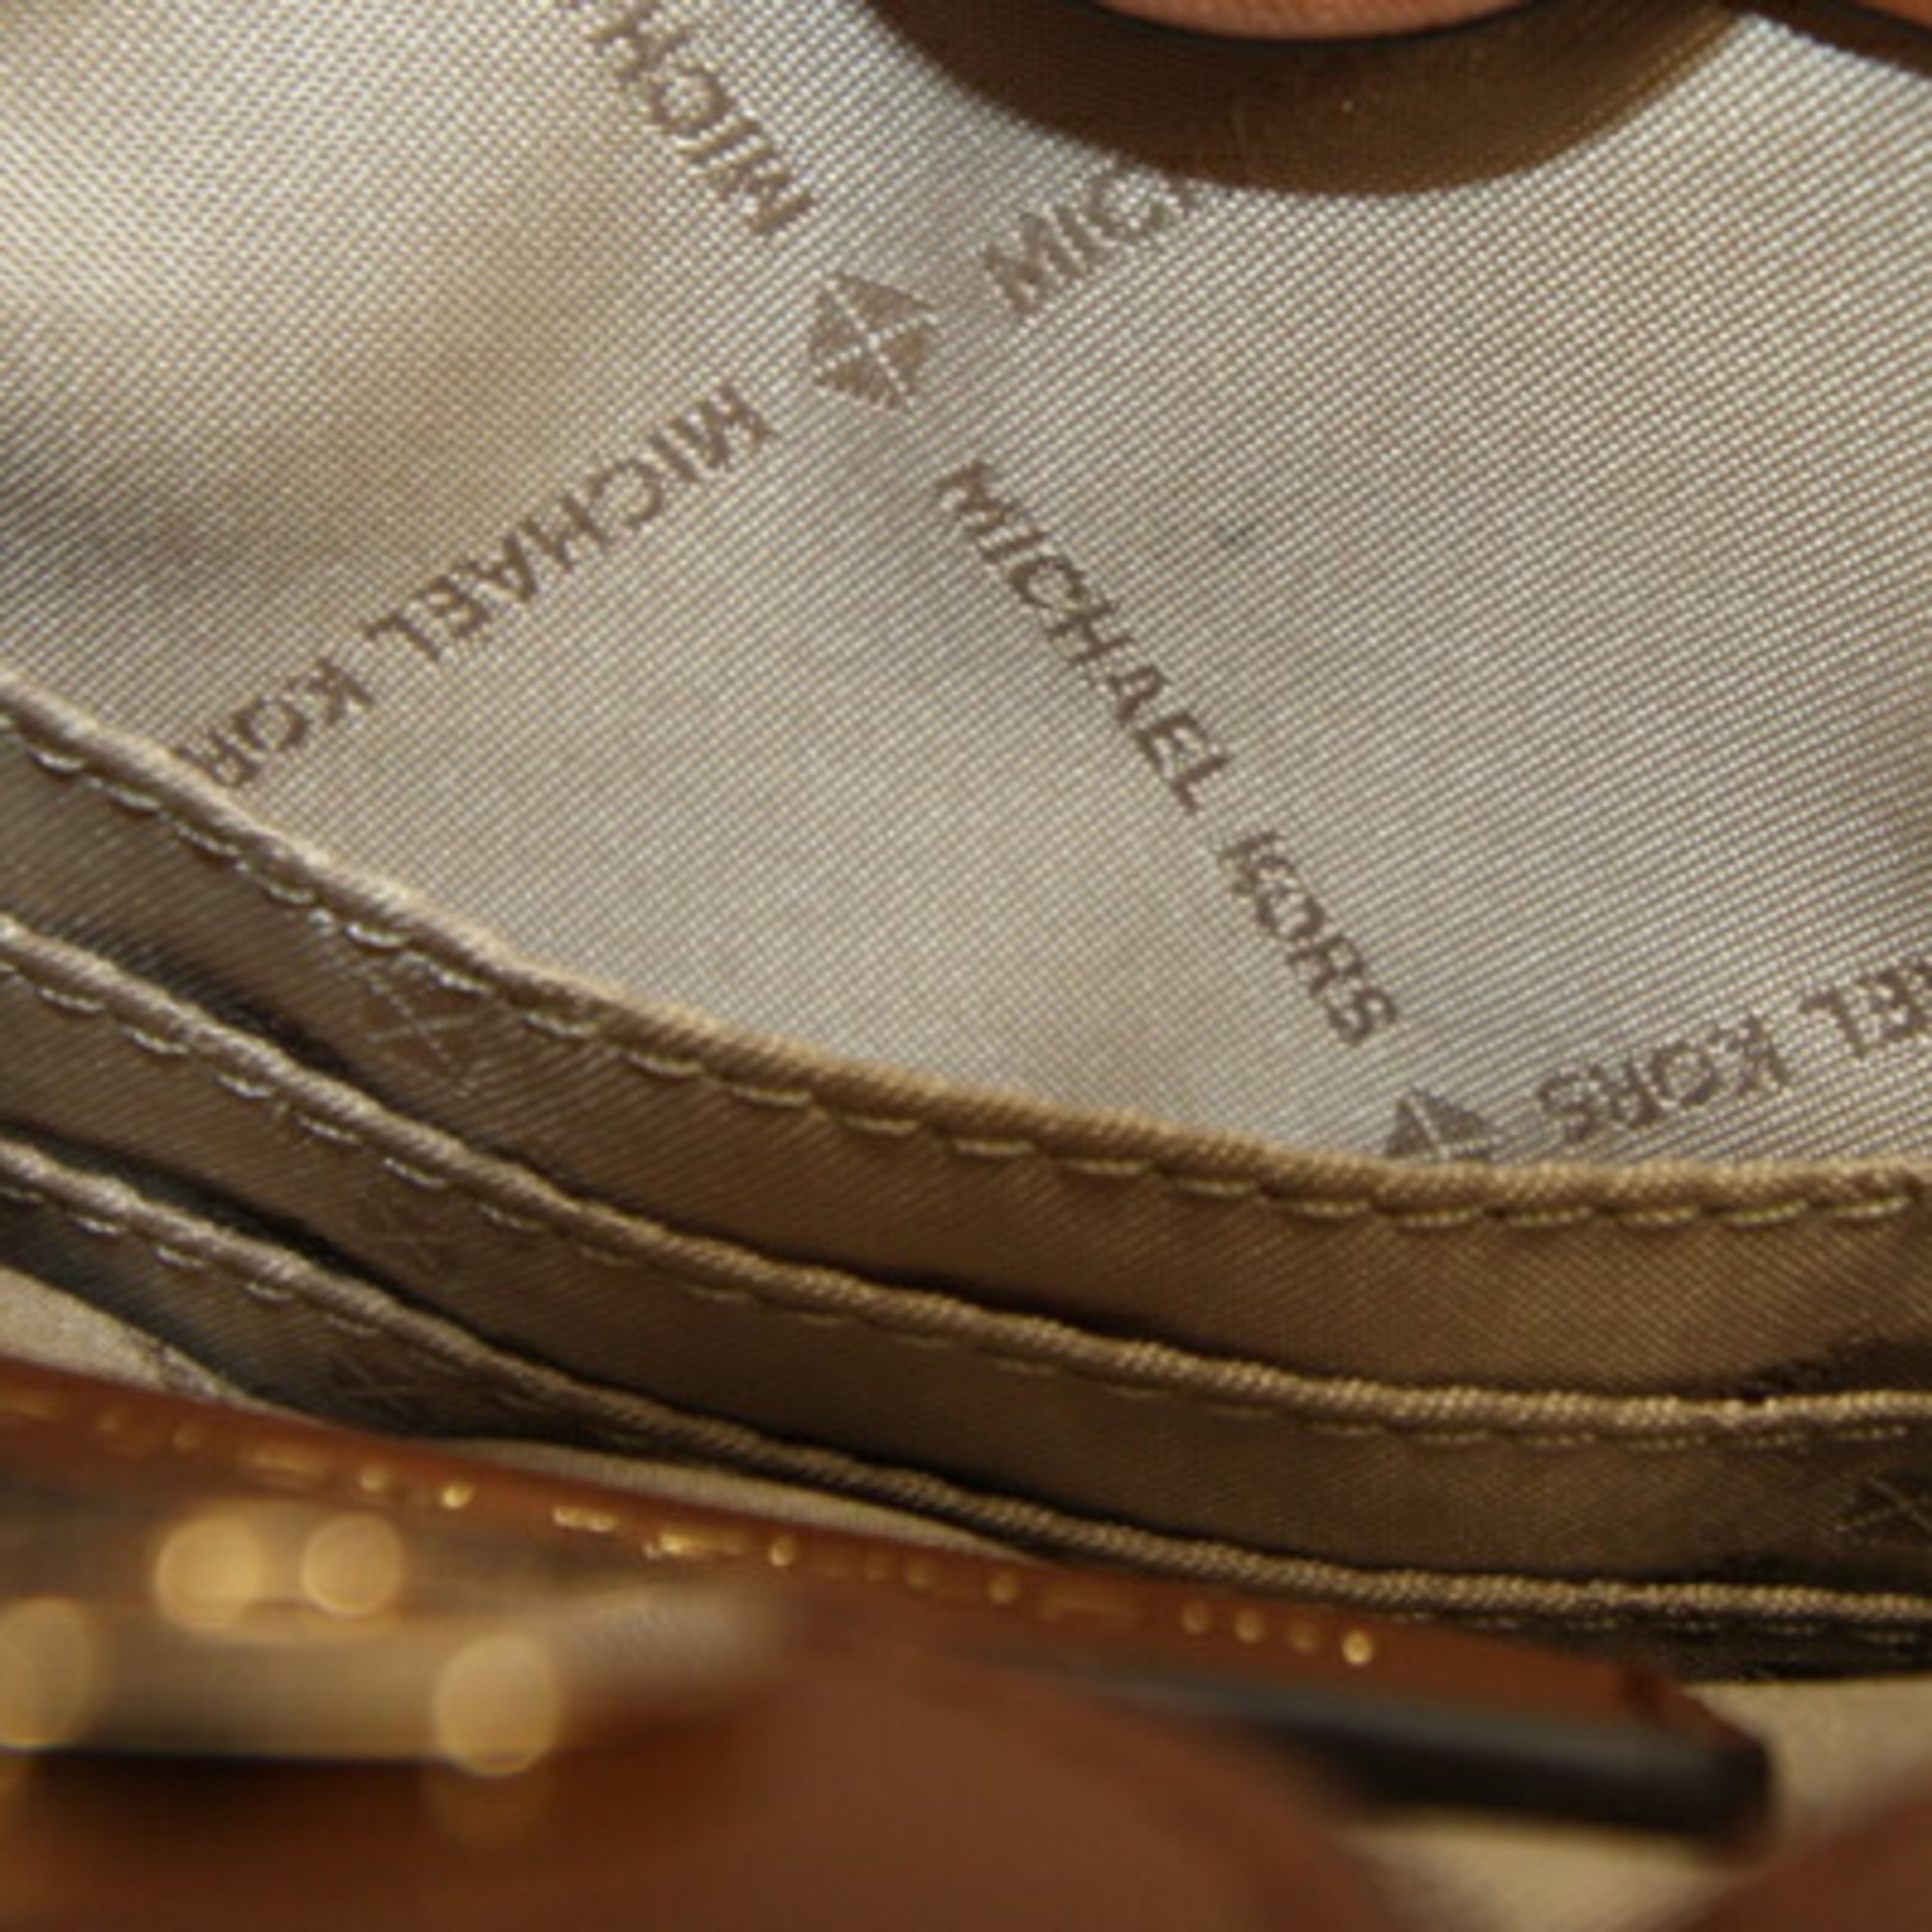 Michael Kors Handbag 35T1GM9C0I Off-white Brown PVC Leather Shoulder Bag Smartphone Women's MICHAEL KORS